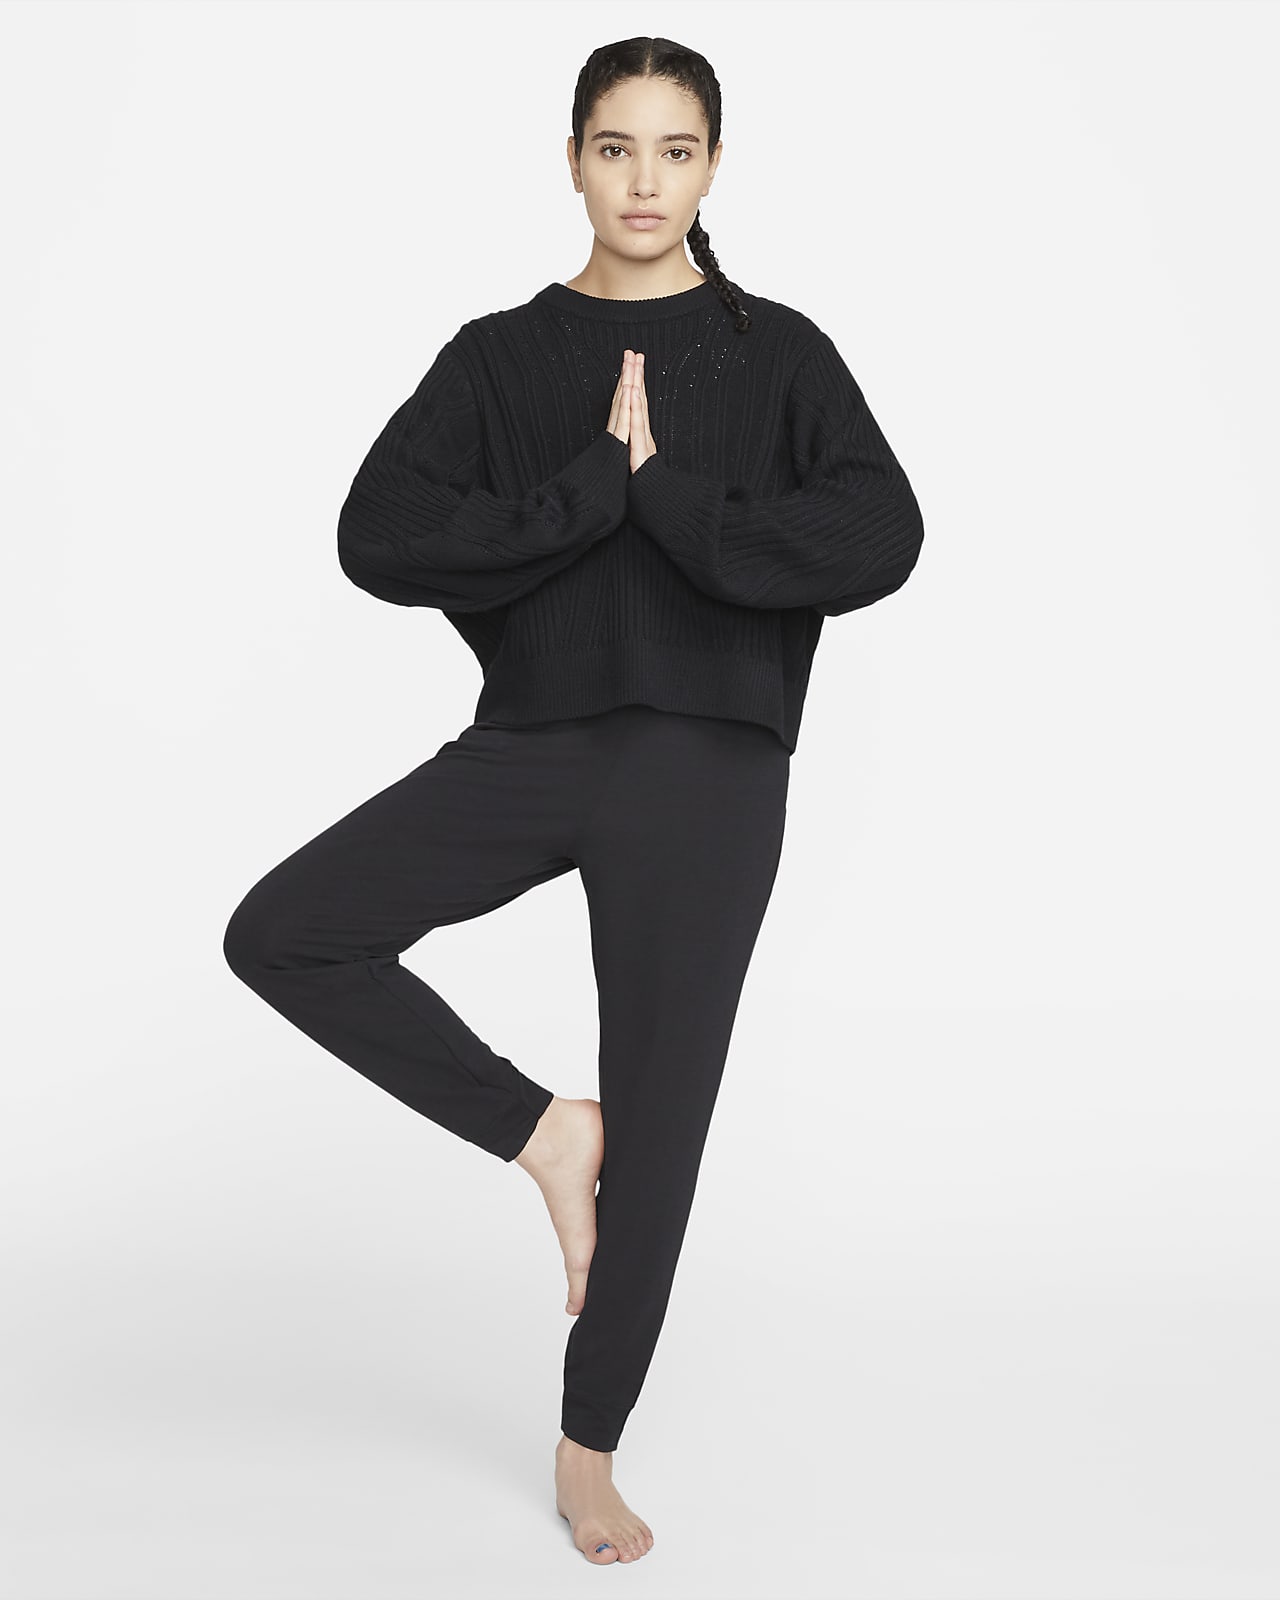 Nike Yoga Women's Grey High-Waisted 7/8 Leggings (DM7023-073) Size